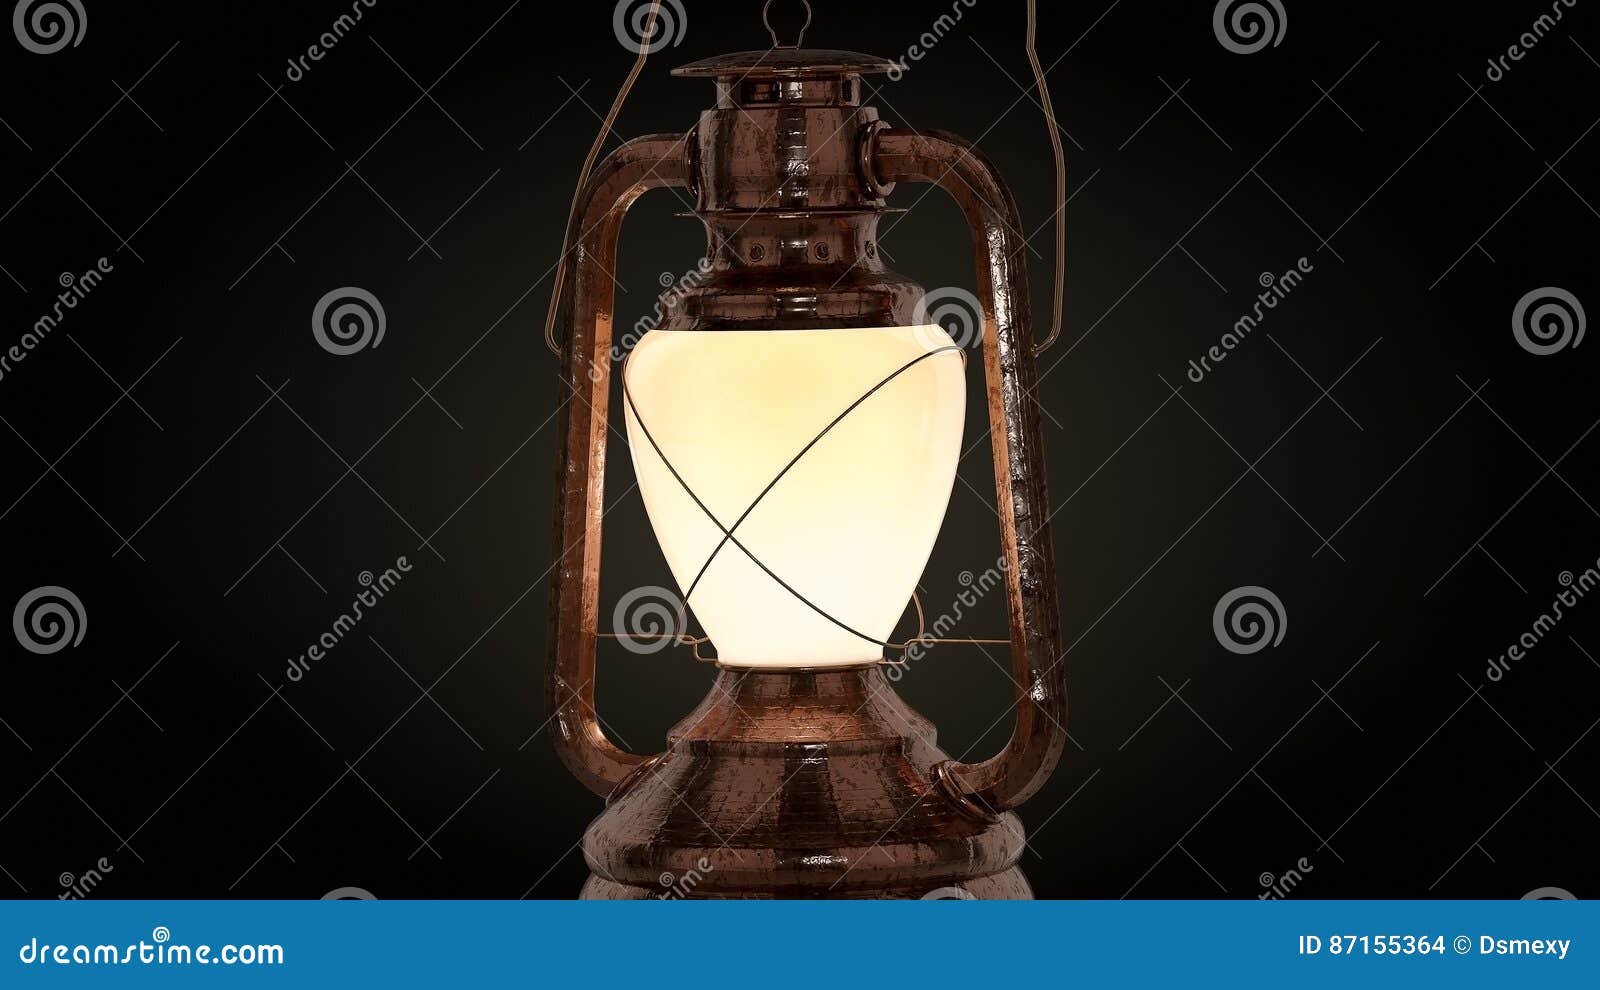 high res 3d rendered petroleum lamp